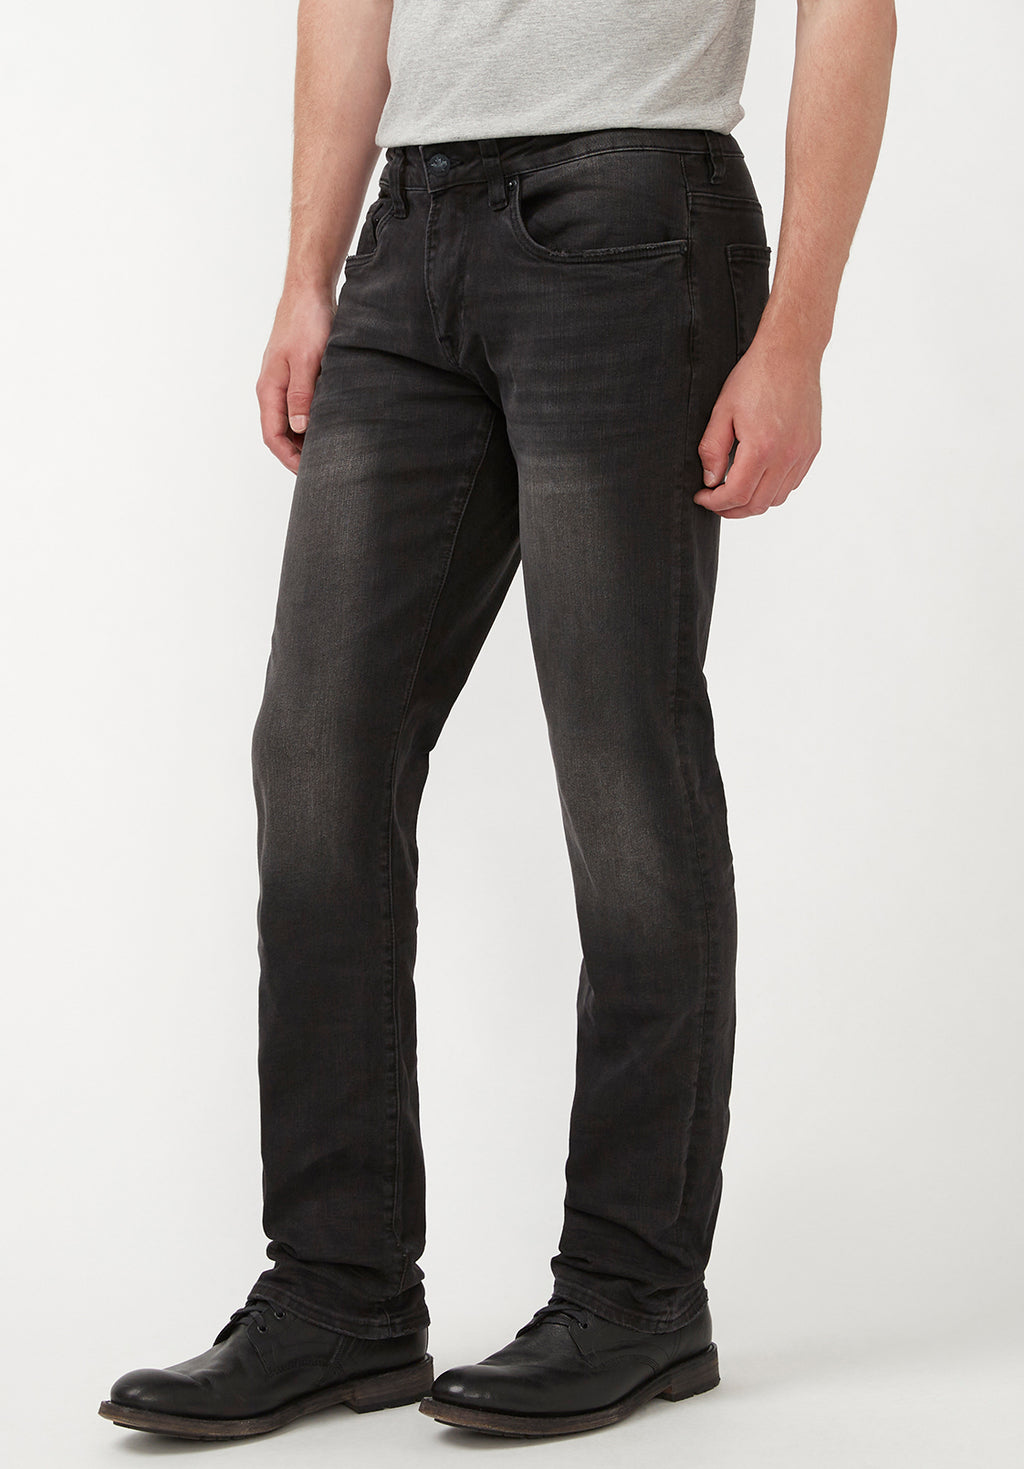 Straight Six Men's Jeans in Crinkled and Sanded Black - BM22614 ...